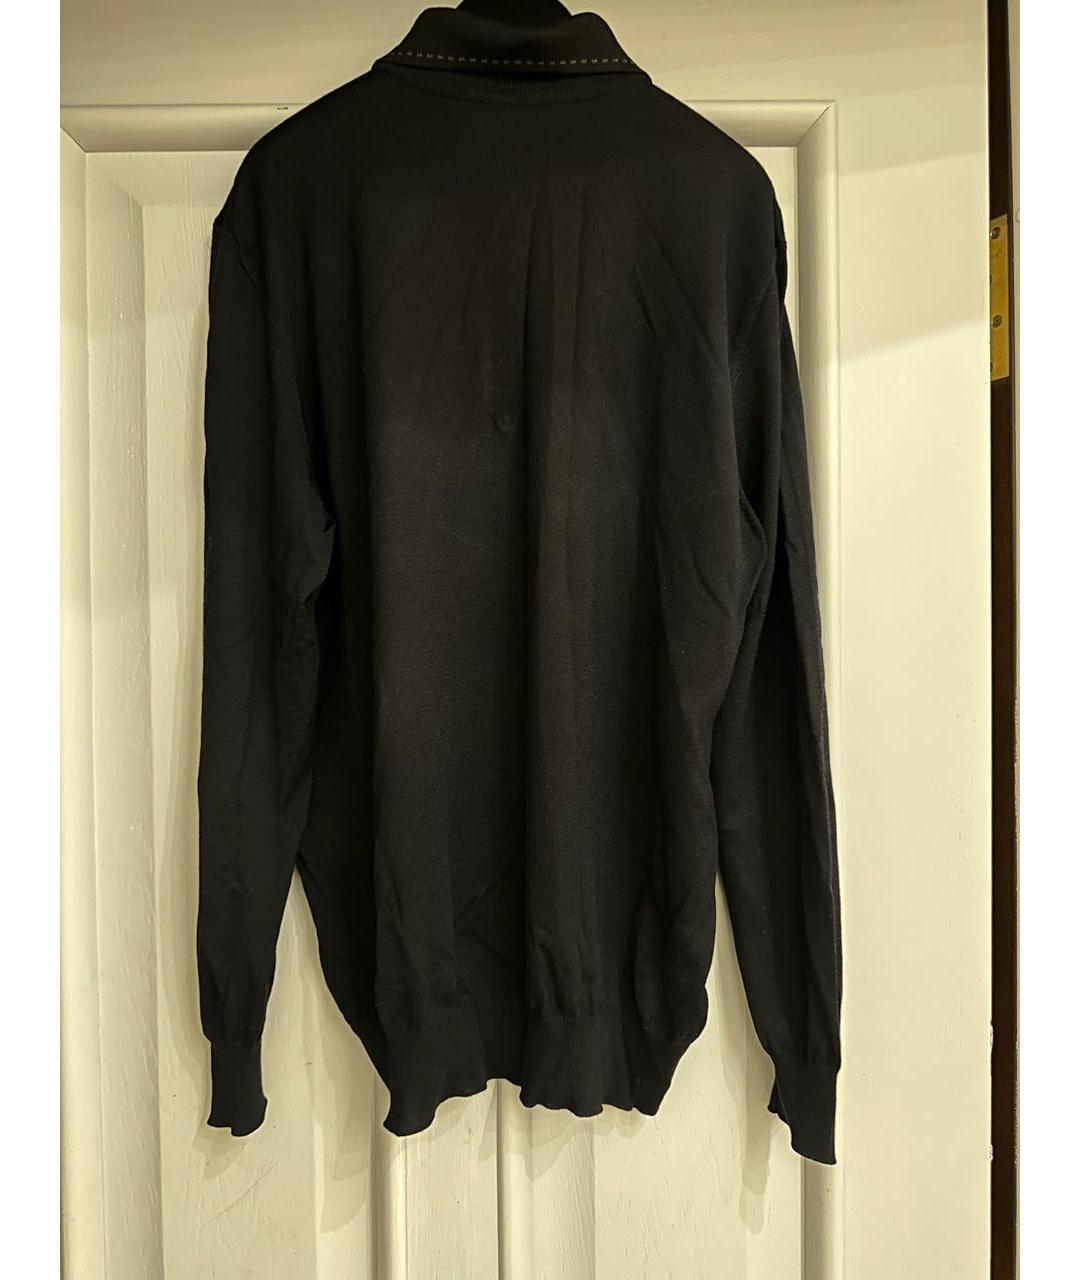 BERTOLO LUXURY MENSWEAR Коричневый шерстяной джемпер / свитер, фото 2